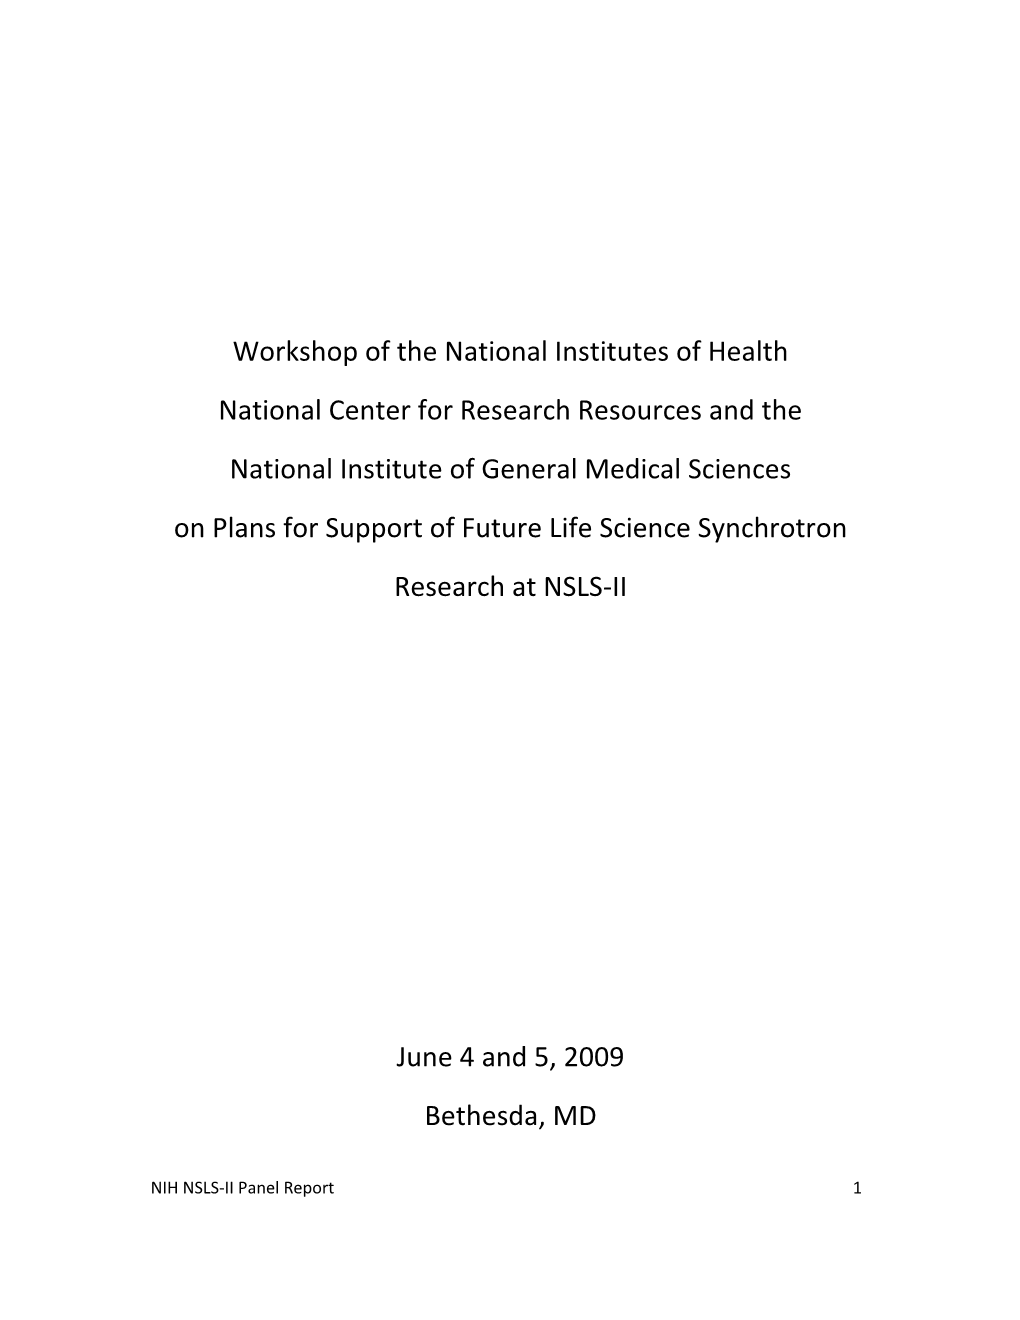 NIH NSLS-II Panel Report 1